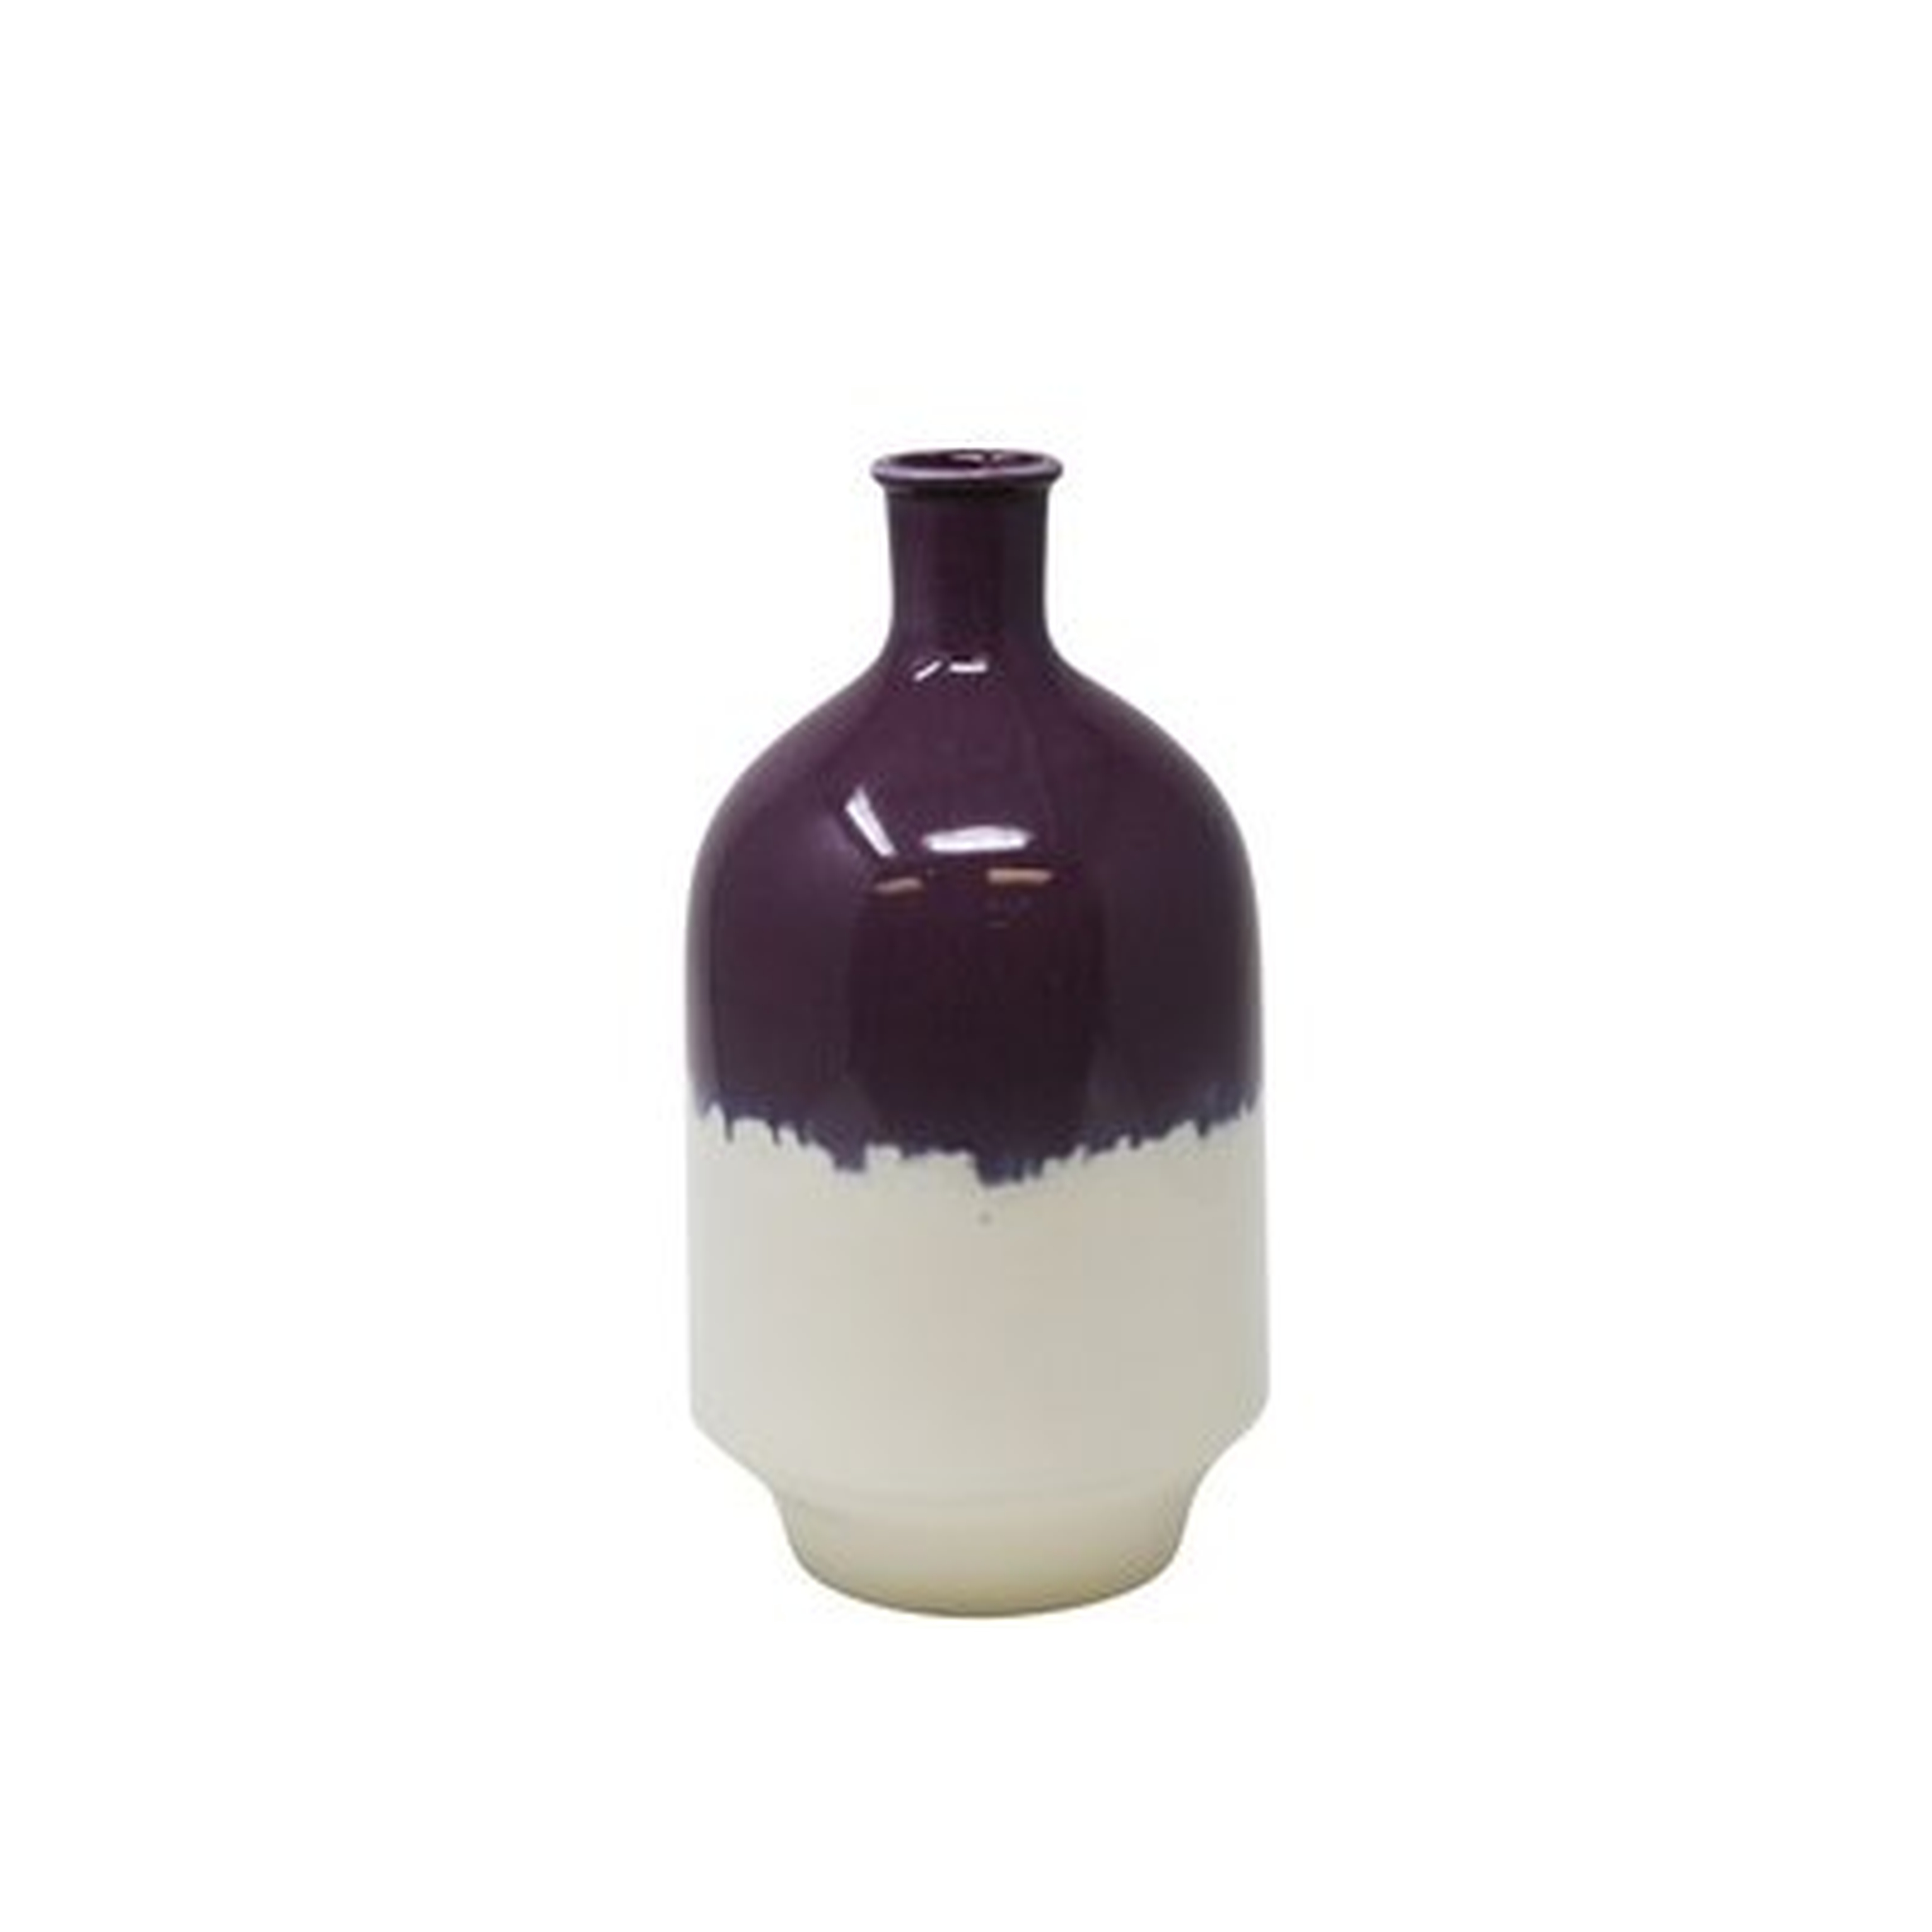 Luongo Decorative Ceramic Table Vase - Wayfair